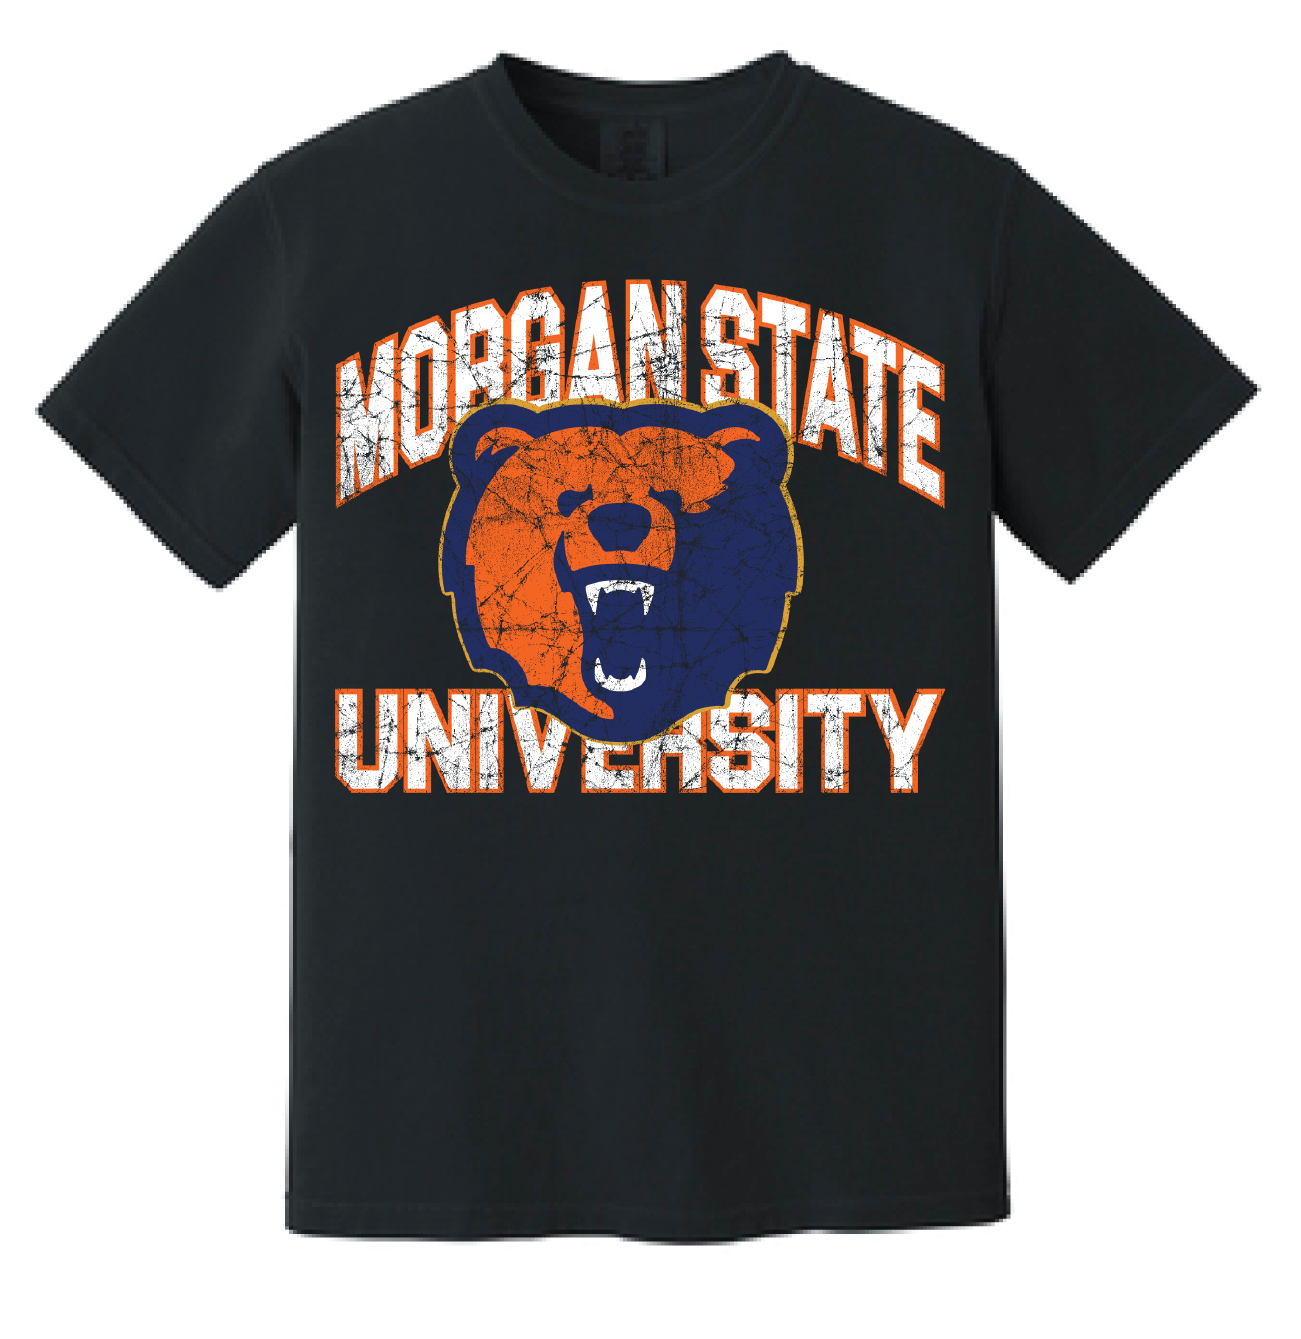 Morgan State University Vintage Style Bears T-shirt